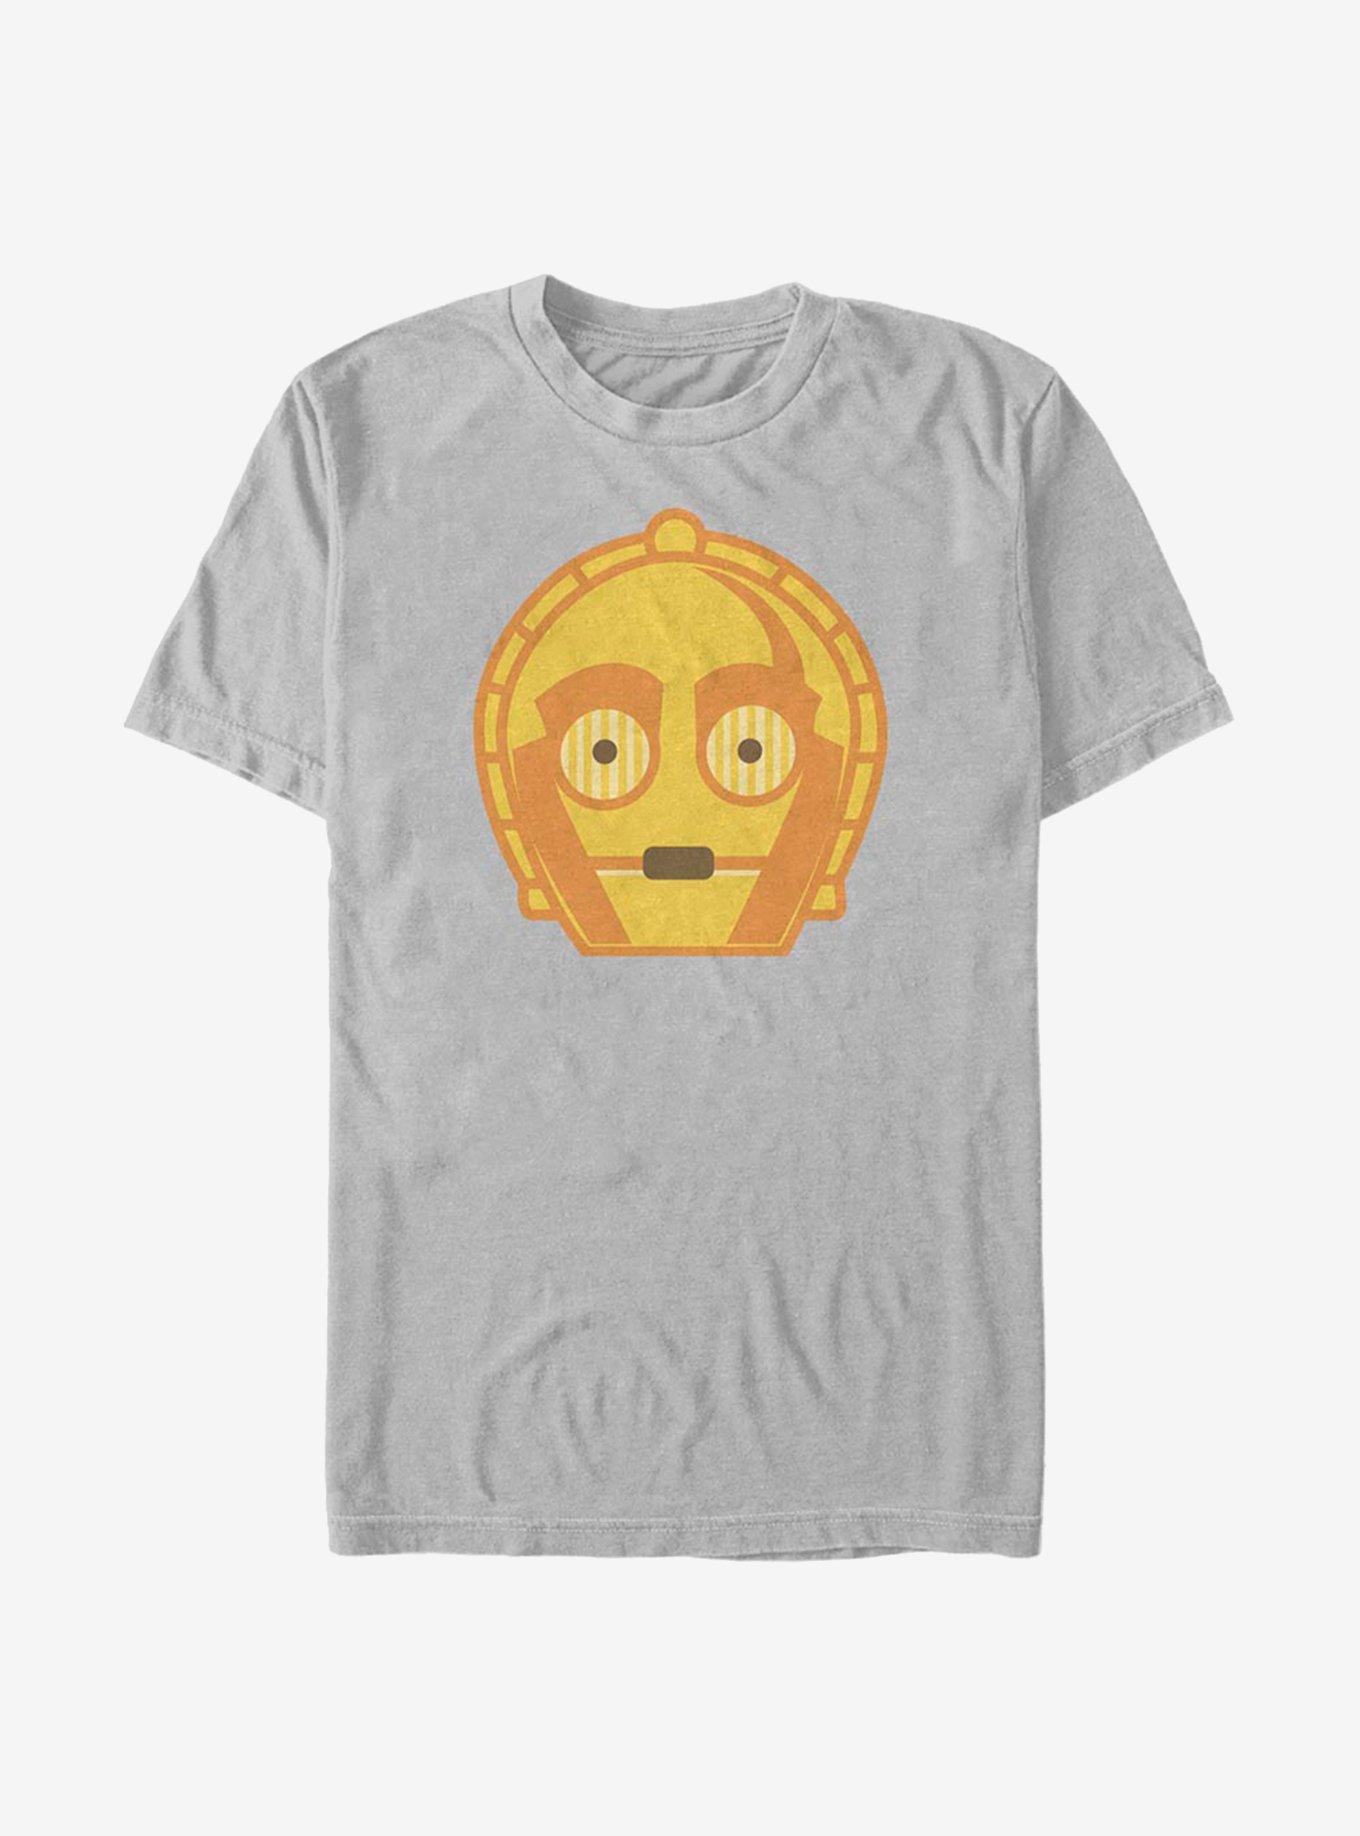 Star Wars Little Story-C-3PO T-Shirt, , hi-res